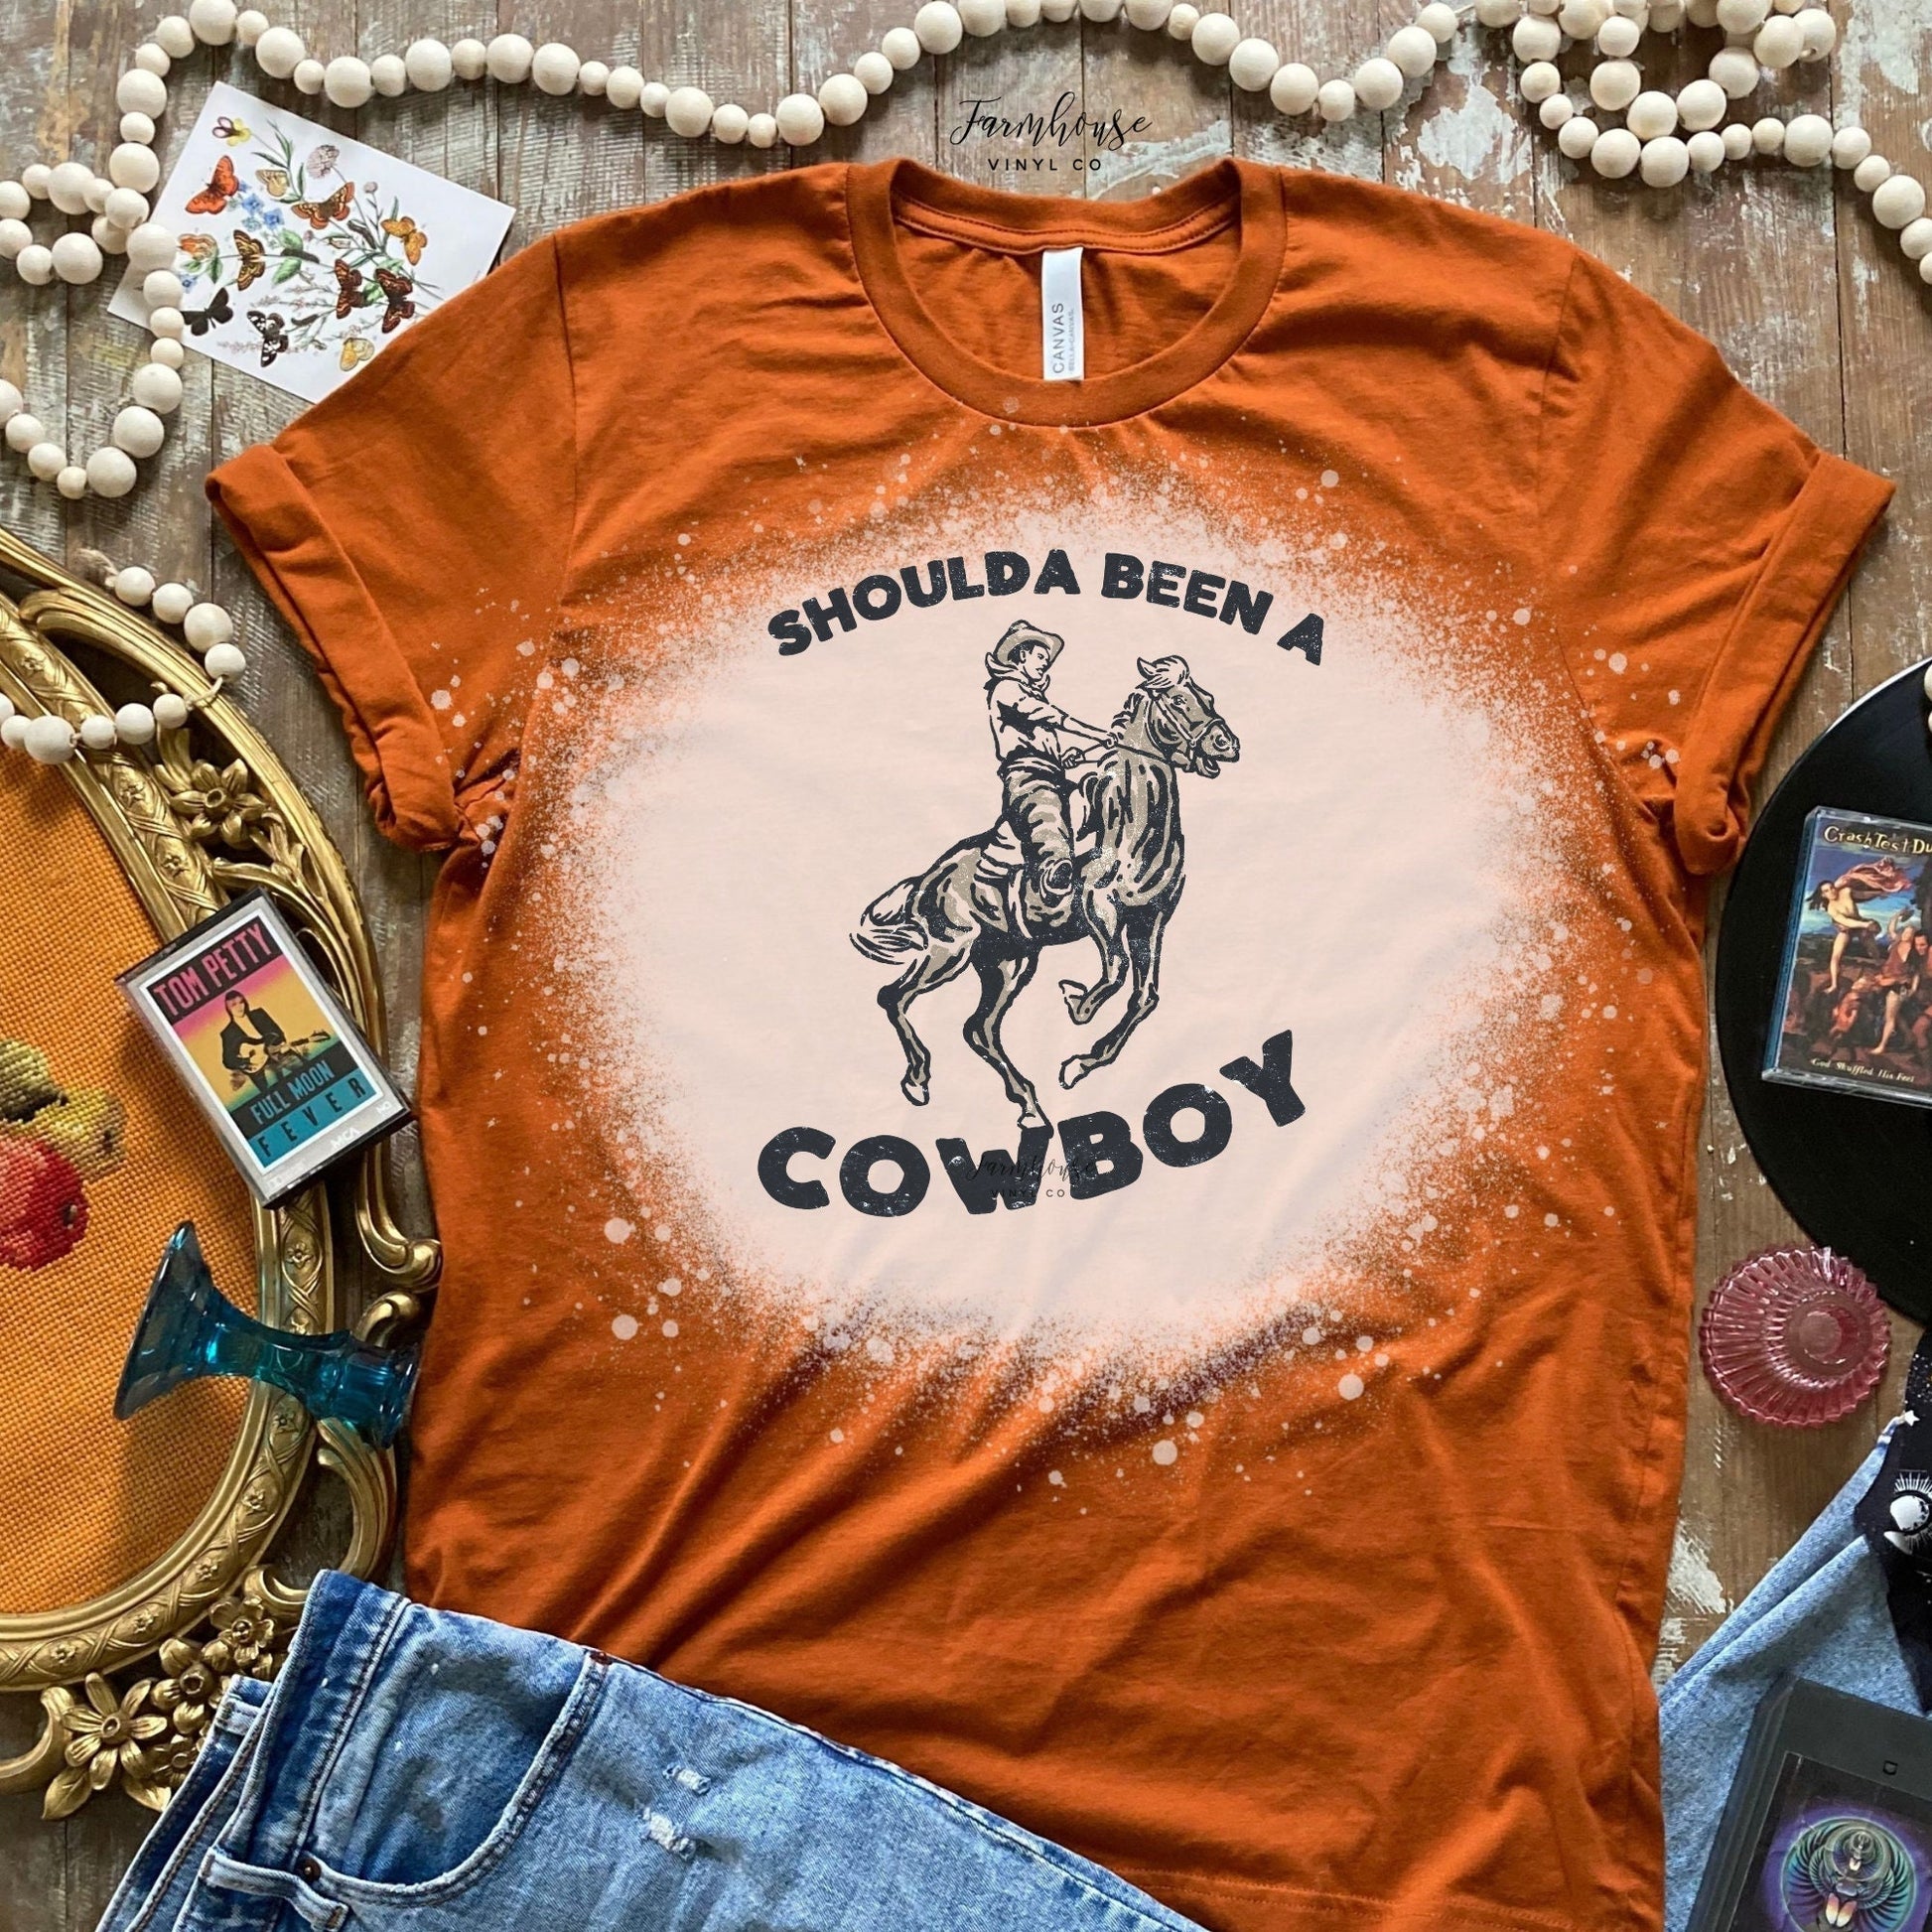 Shoulda Been A Cowboy Southern Bleached Shirt / Trendy shirt / Country Music Fan Shirt / 90s country music song artist / Concert Shirt - Farmhouse Vinyl Co